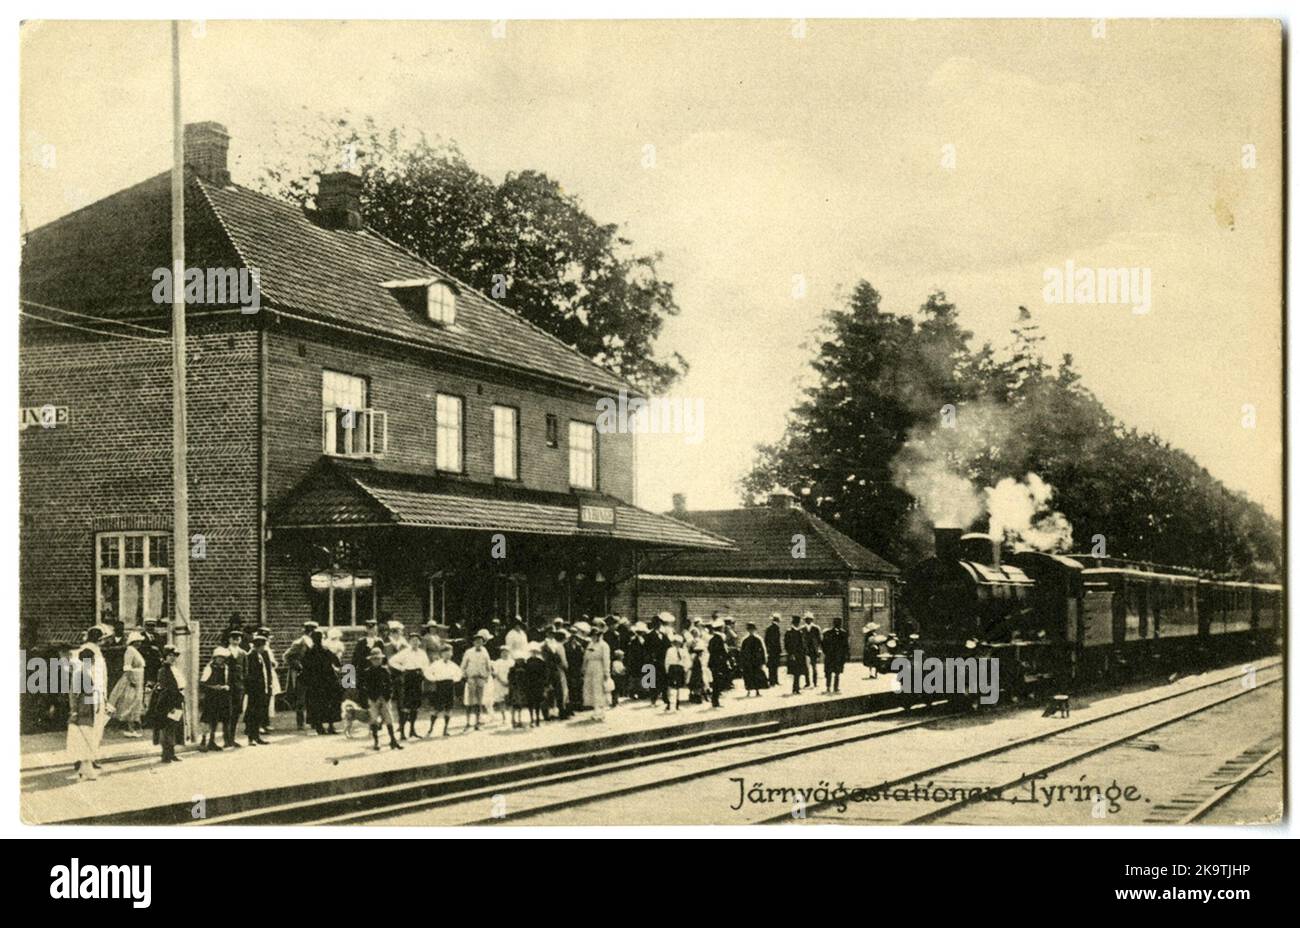 Tyringe station. The station house built 1912-1913. Stock Photo